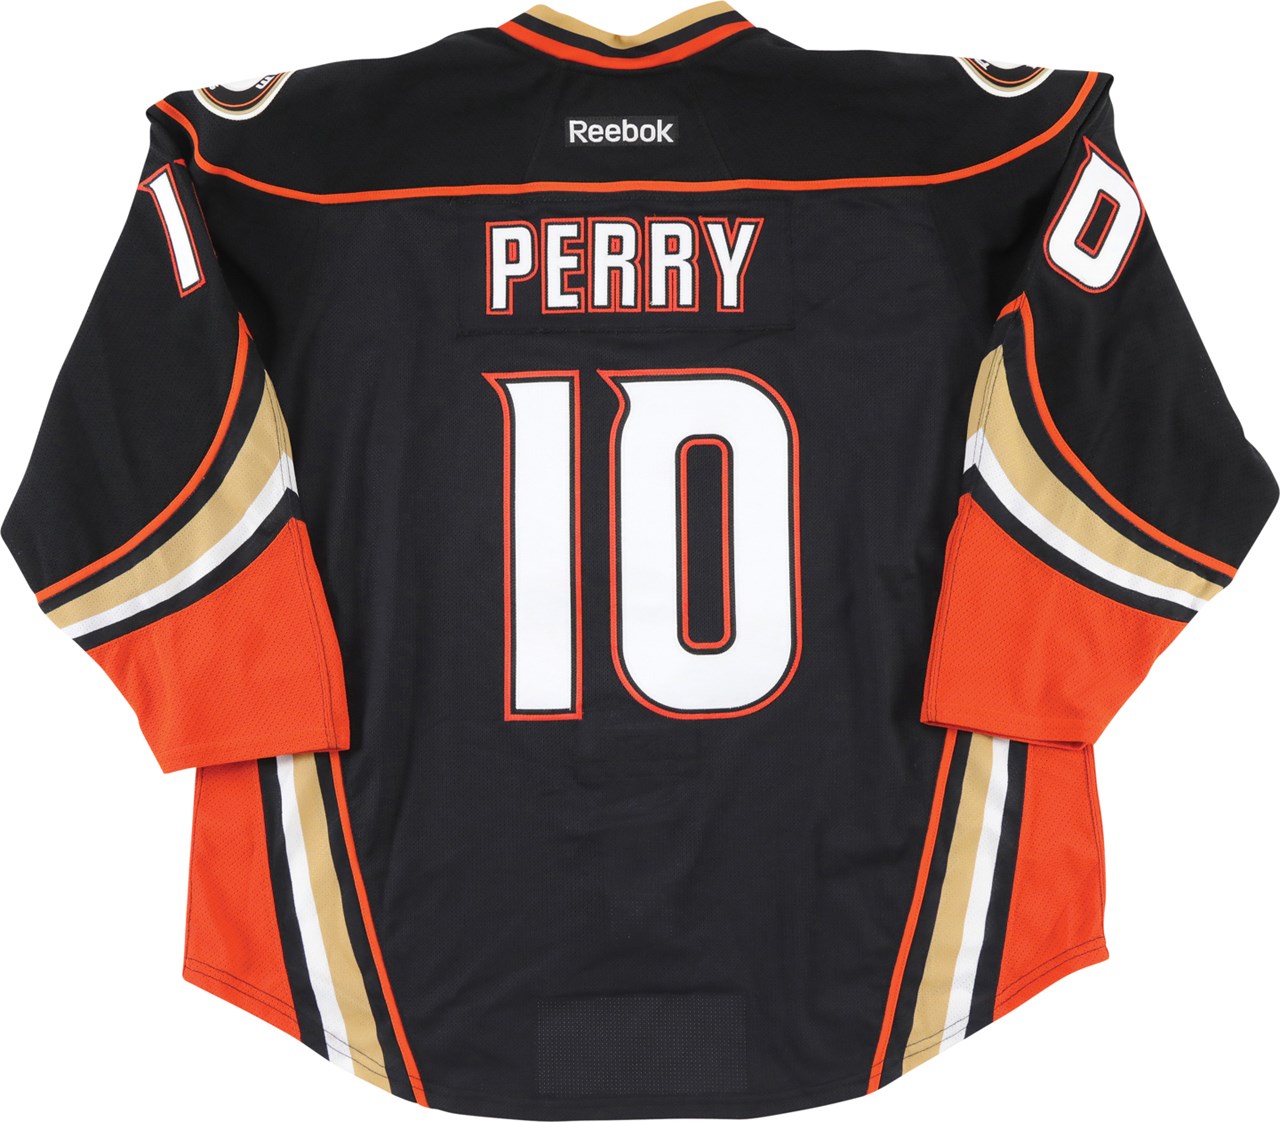 Hockey - 2015 Corey Perry Anaheim Ducks Teemu Selanne Tribute Night Game Worn Jersey